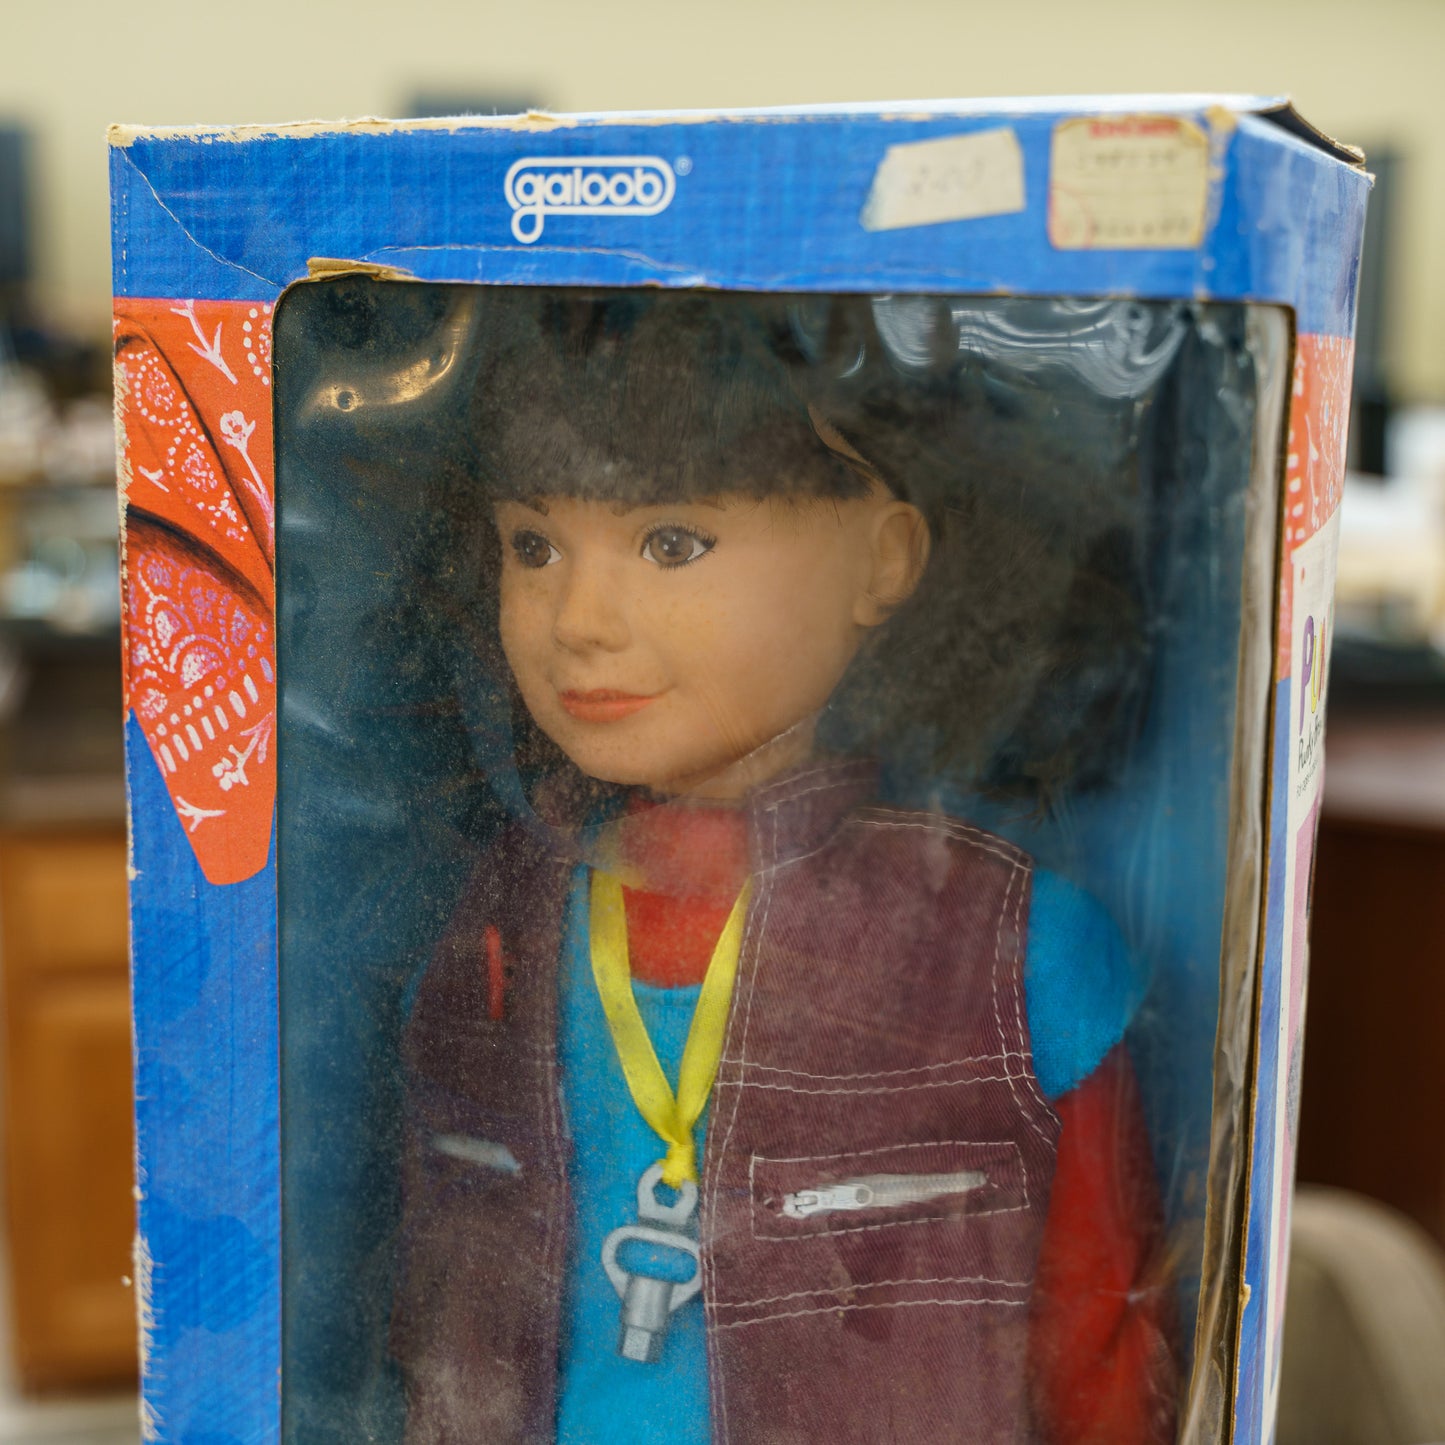 Punky Brewster doll in original box - 1984